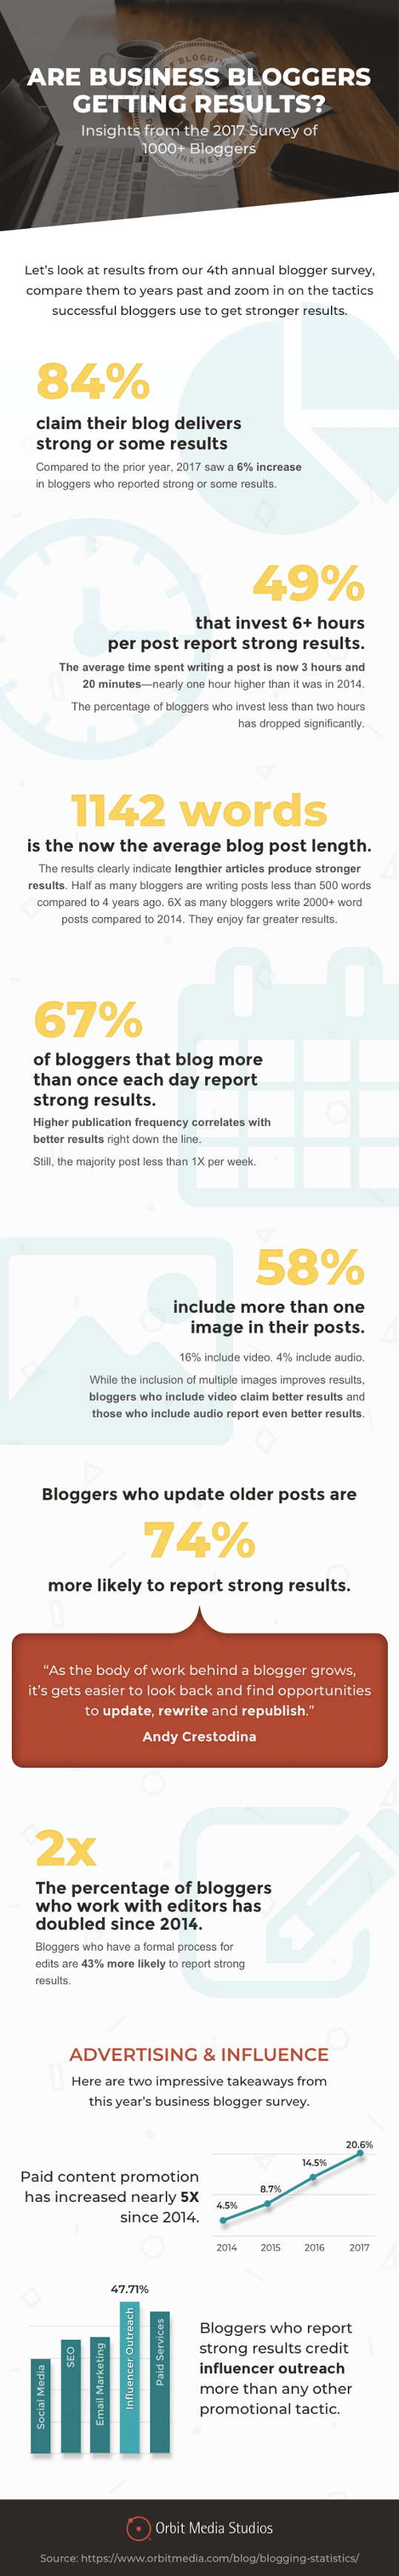 blogger survey infographic-min.png